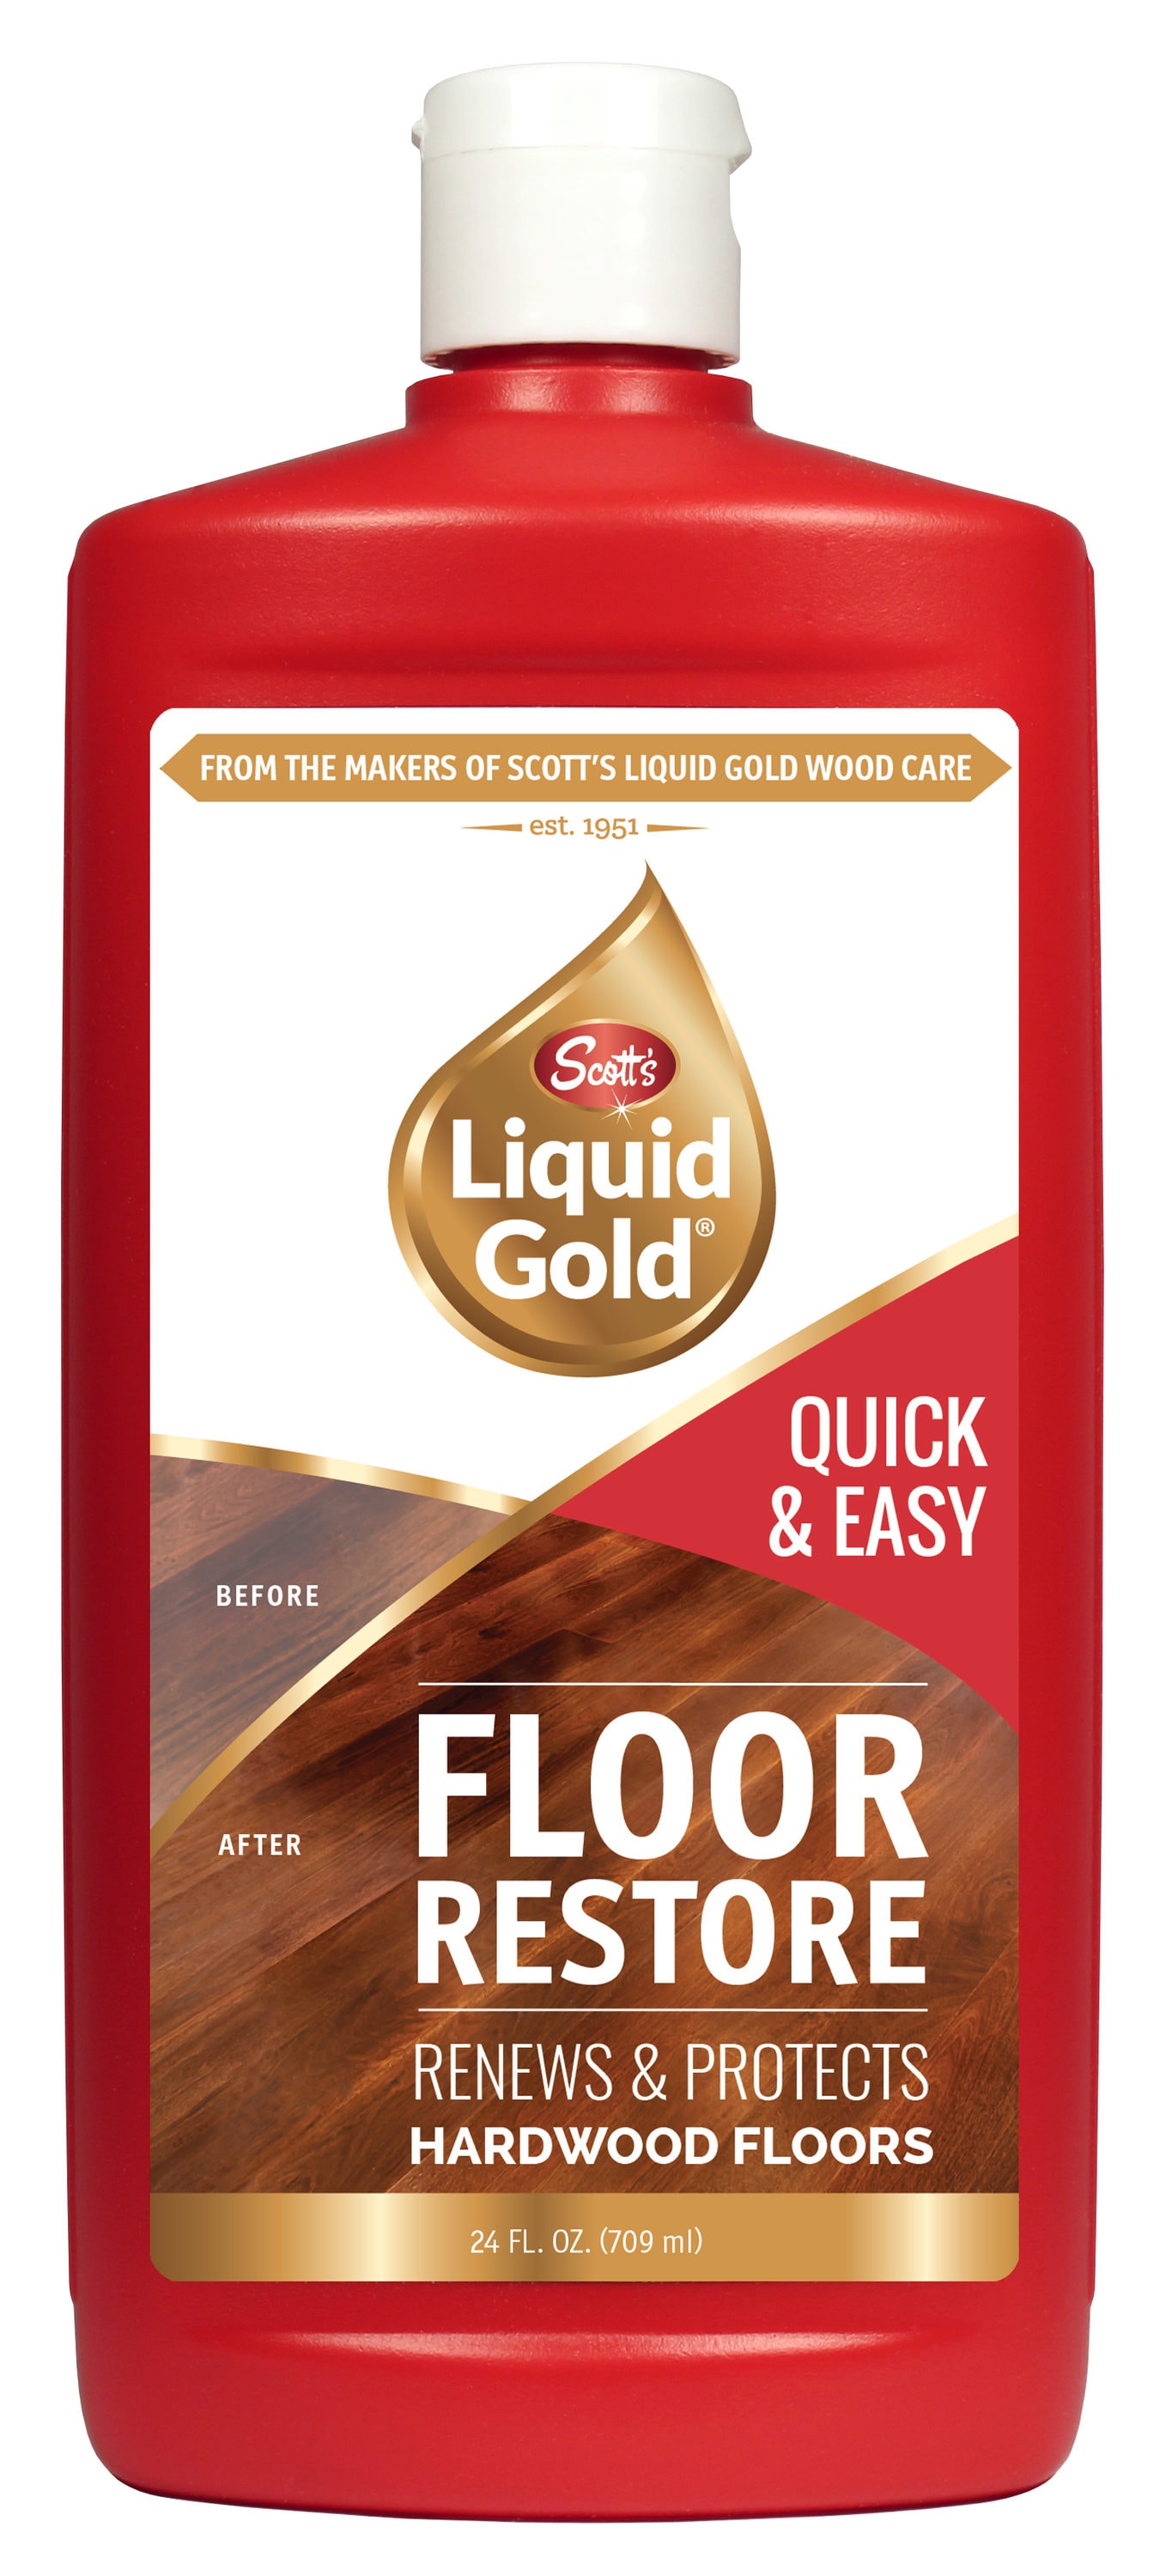 Scotts Liquid Gold A-10 Liquid Gold Aerosol Wood Care - 10 oz